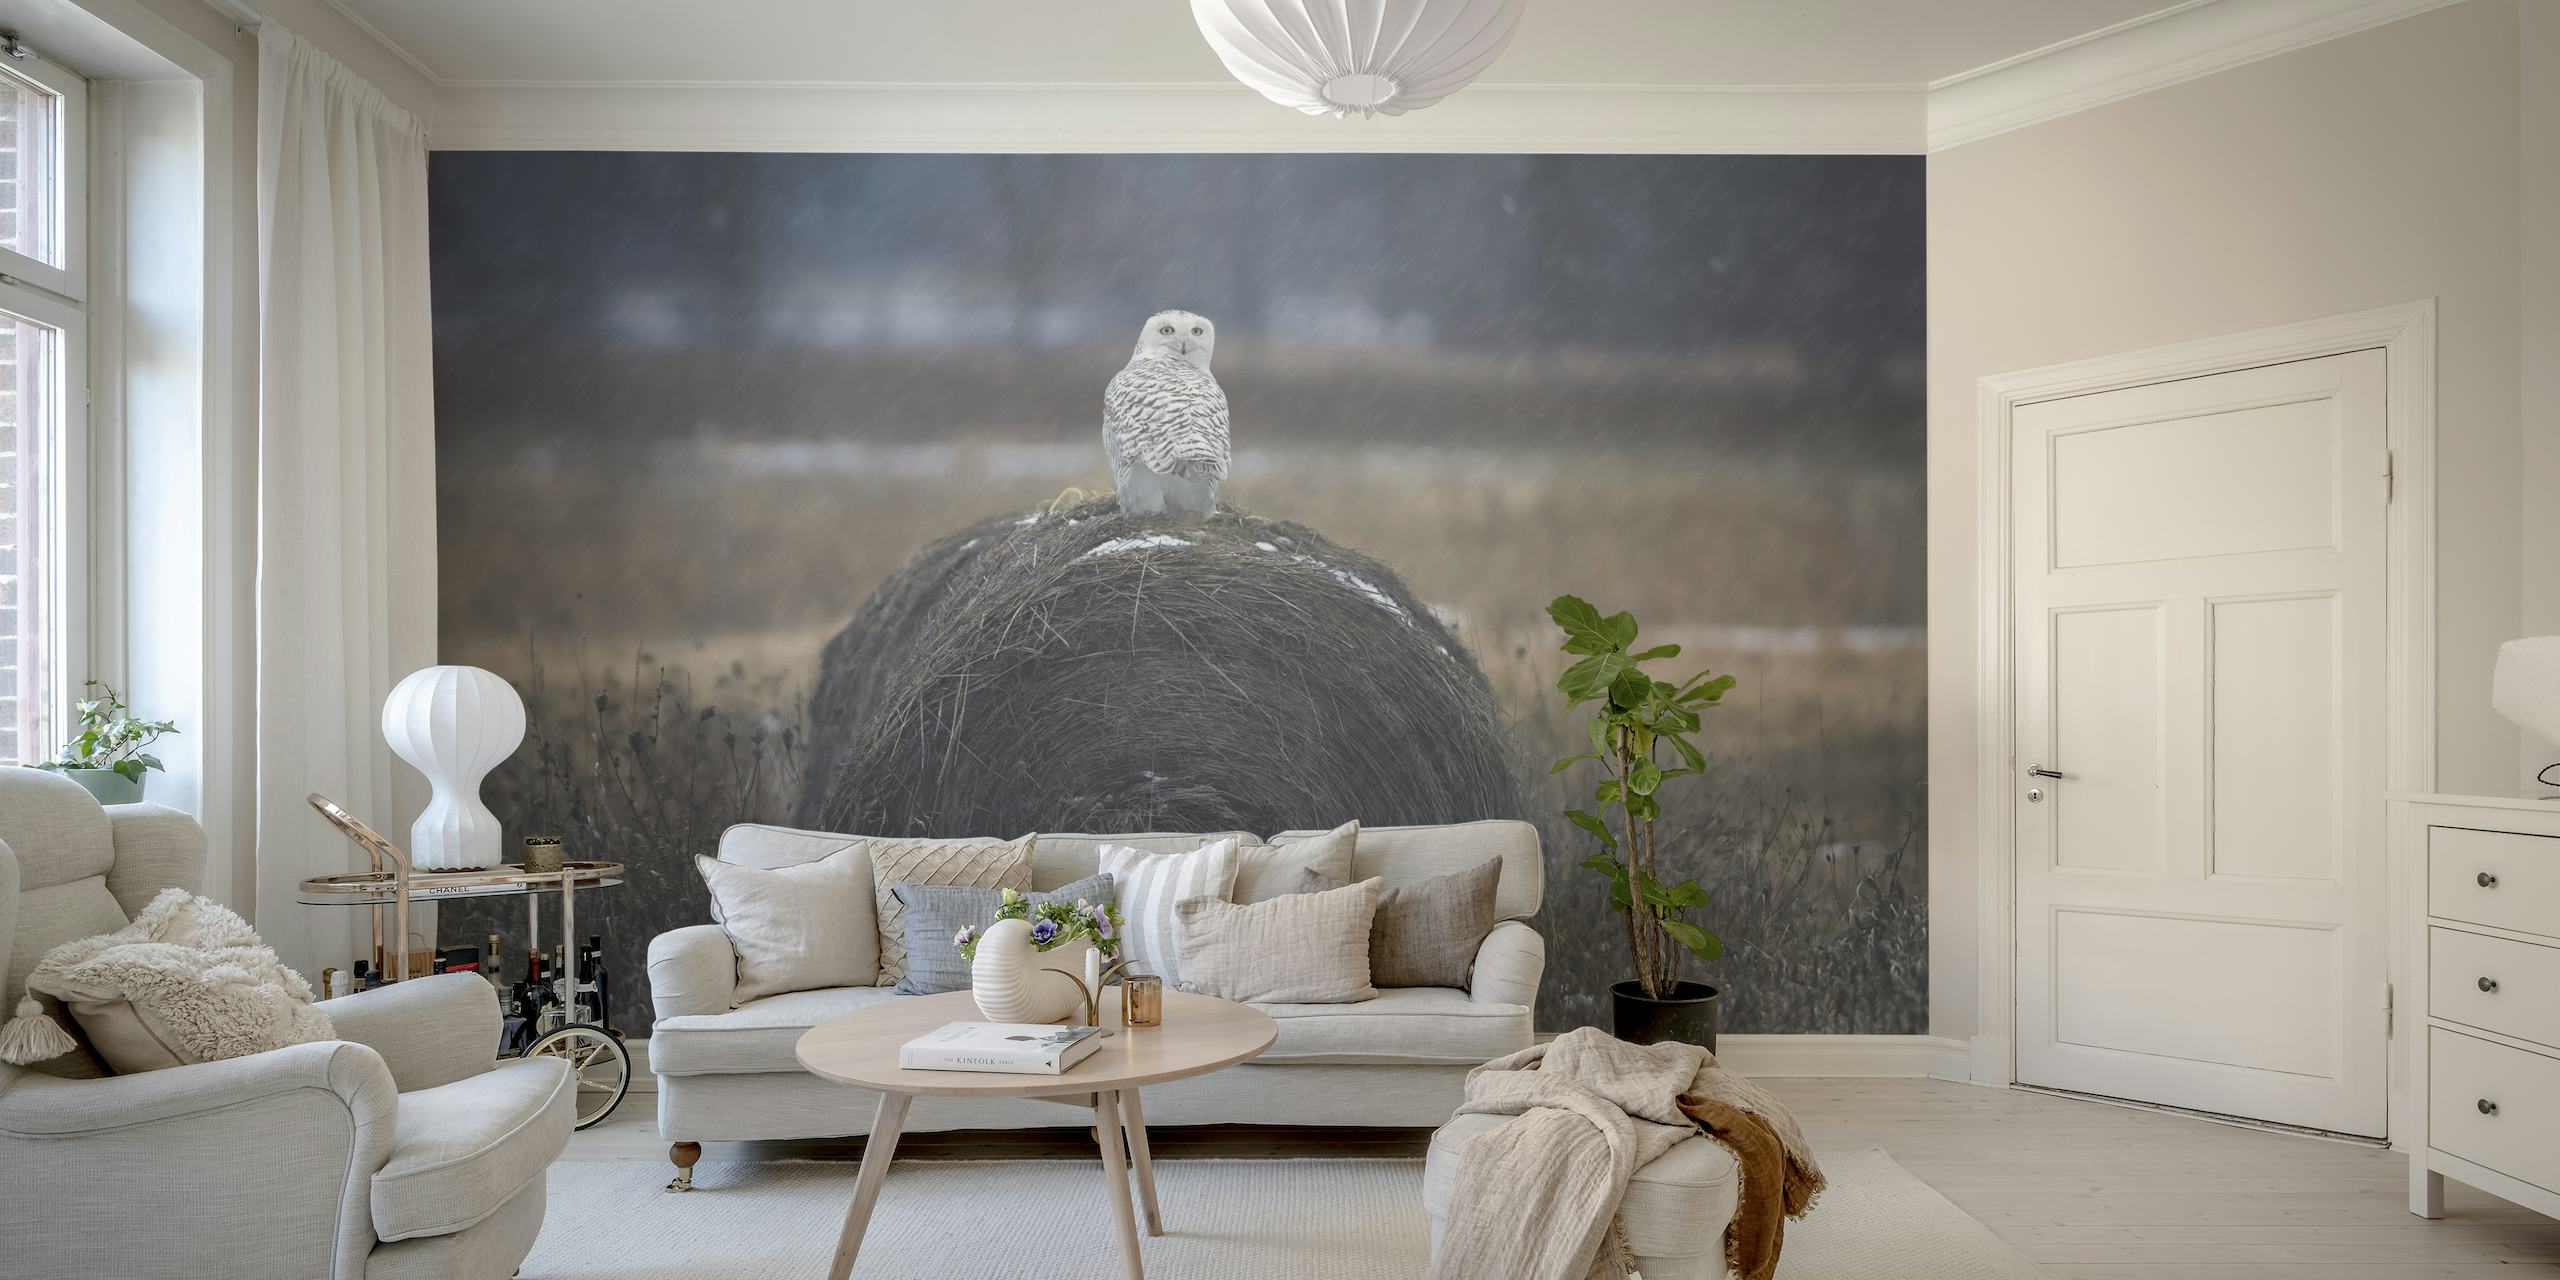 Serene snowy owl 'Princess' on a hay bale wall mural